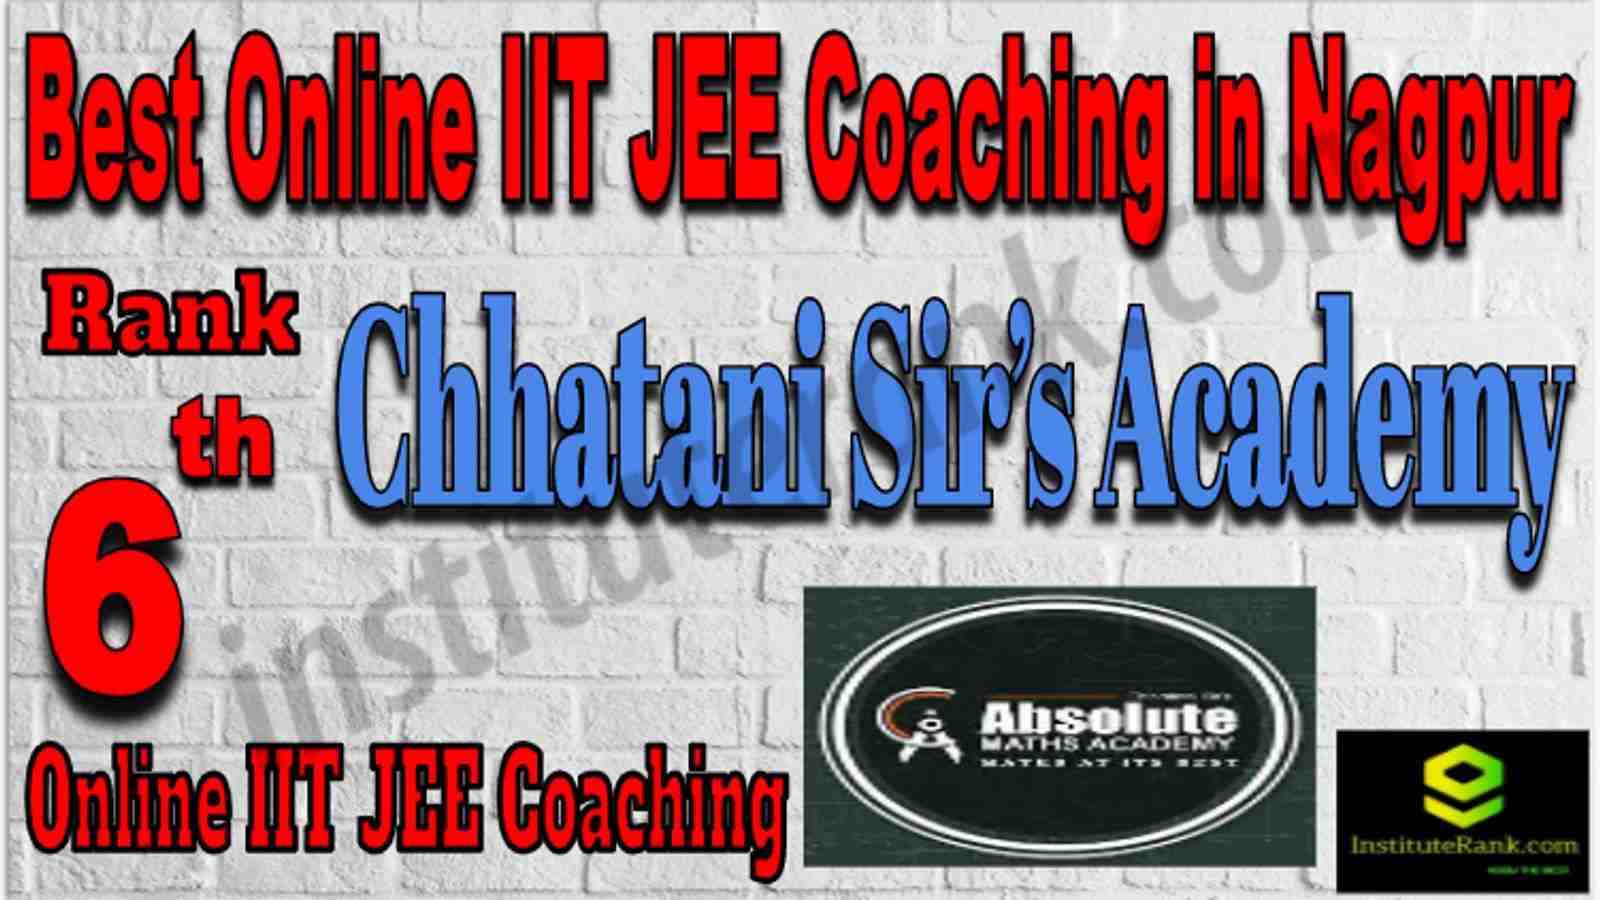 Rank 6 Best Online IIT JEE Coaching in Nagpur